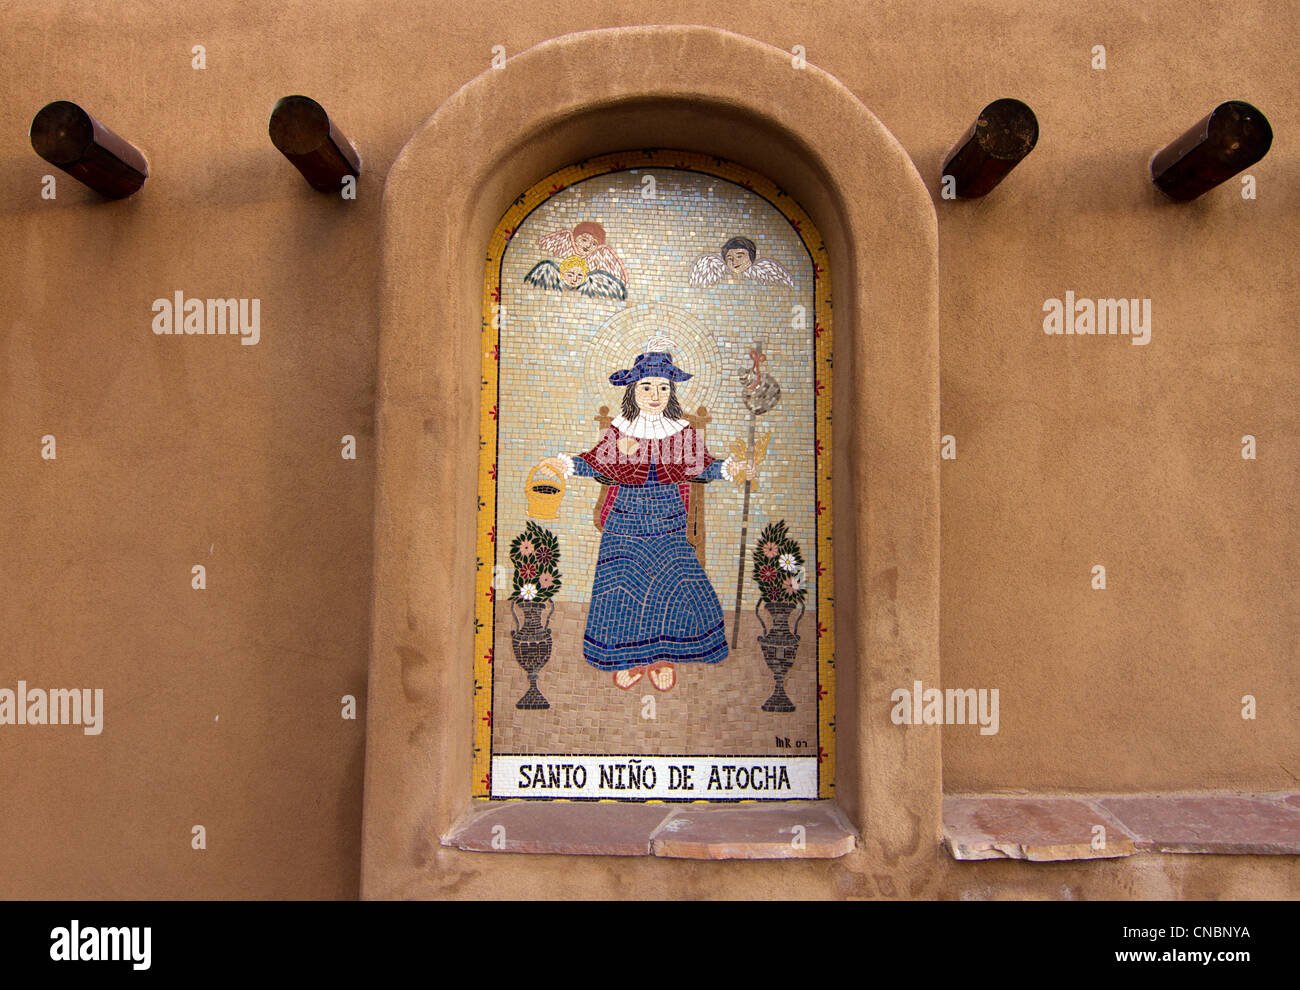 The Santo Niño de Atocha, a Roman Catholic image of the Child Jesus, outside of a church in Chimayo, New Mexico. Stock Photo